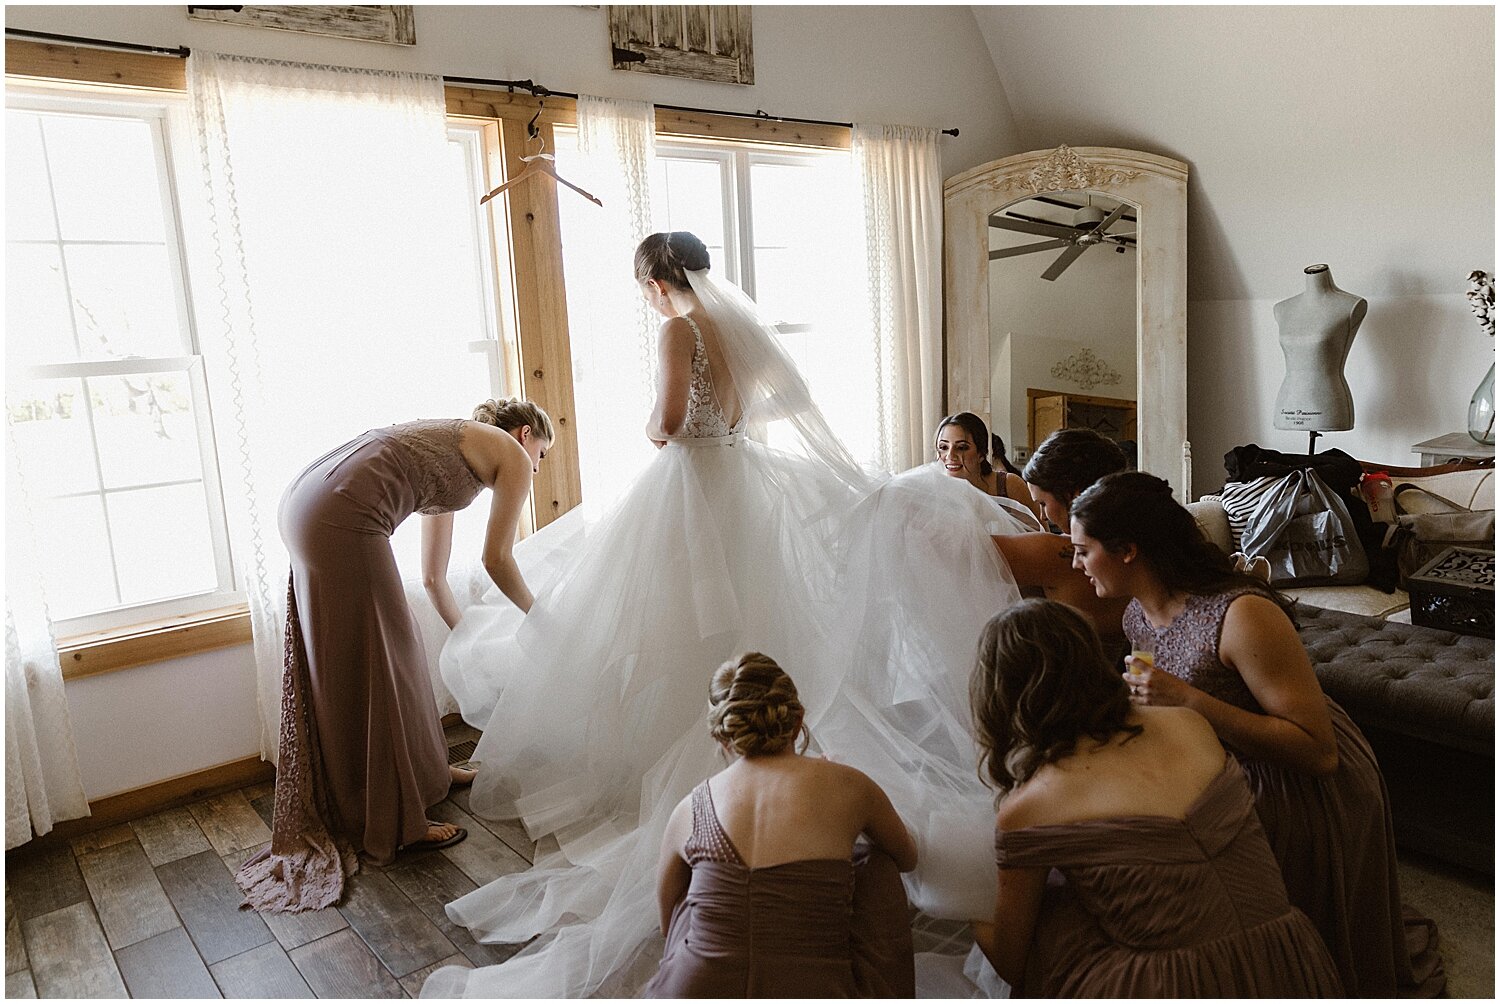  bridesmaids helping the bride get ready 